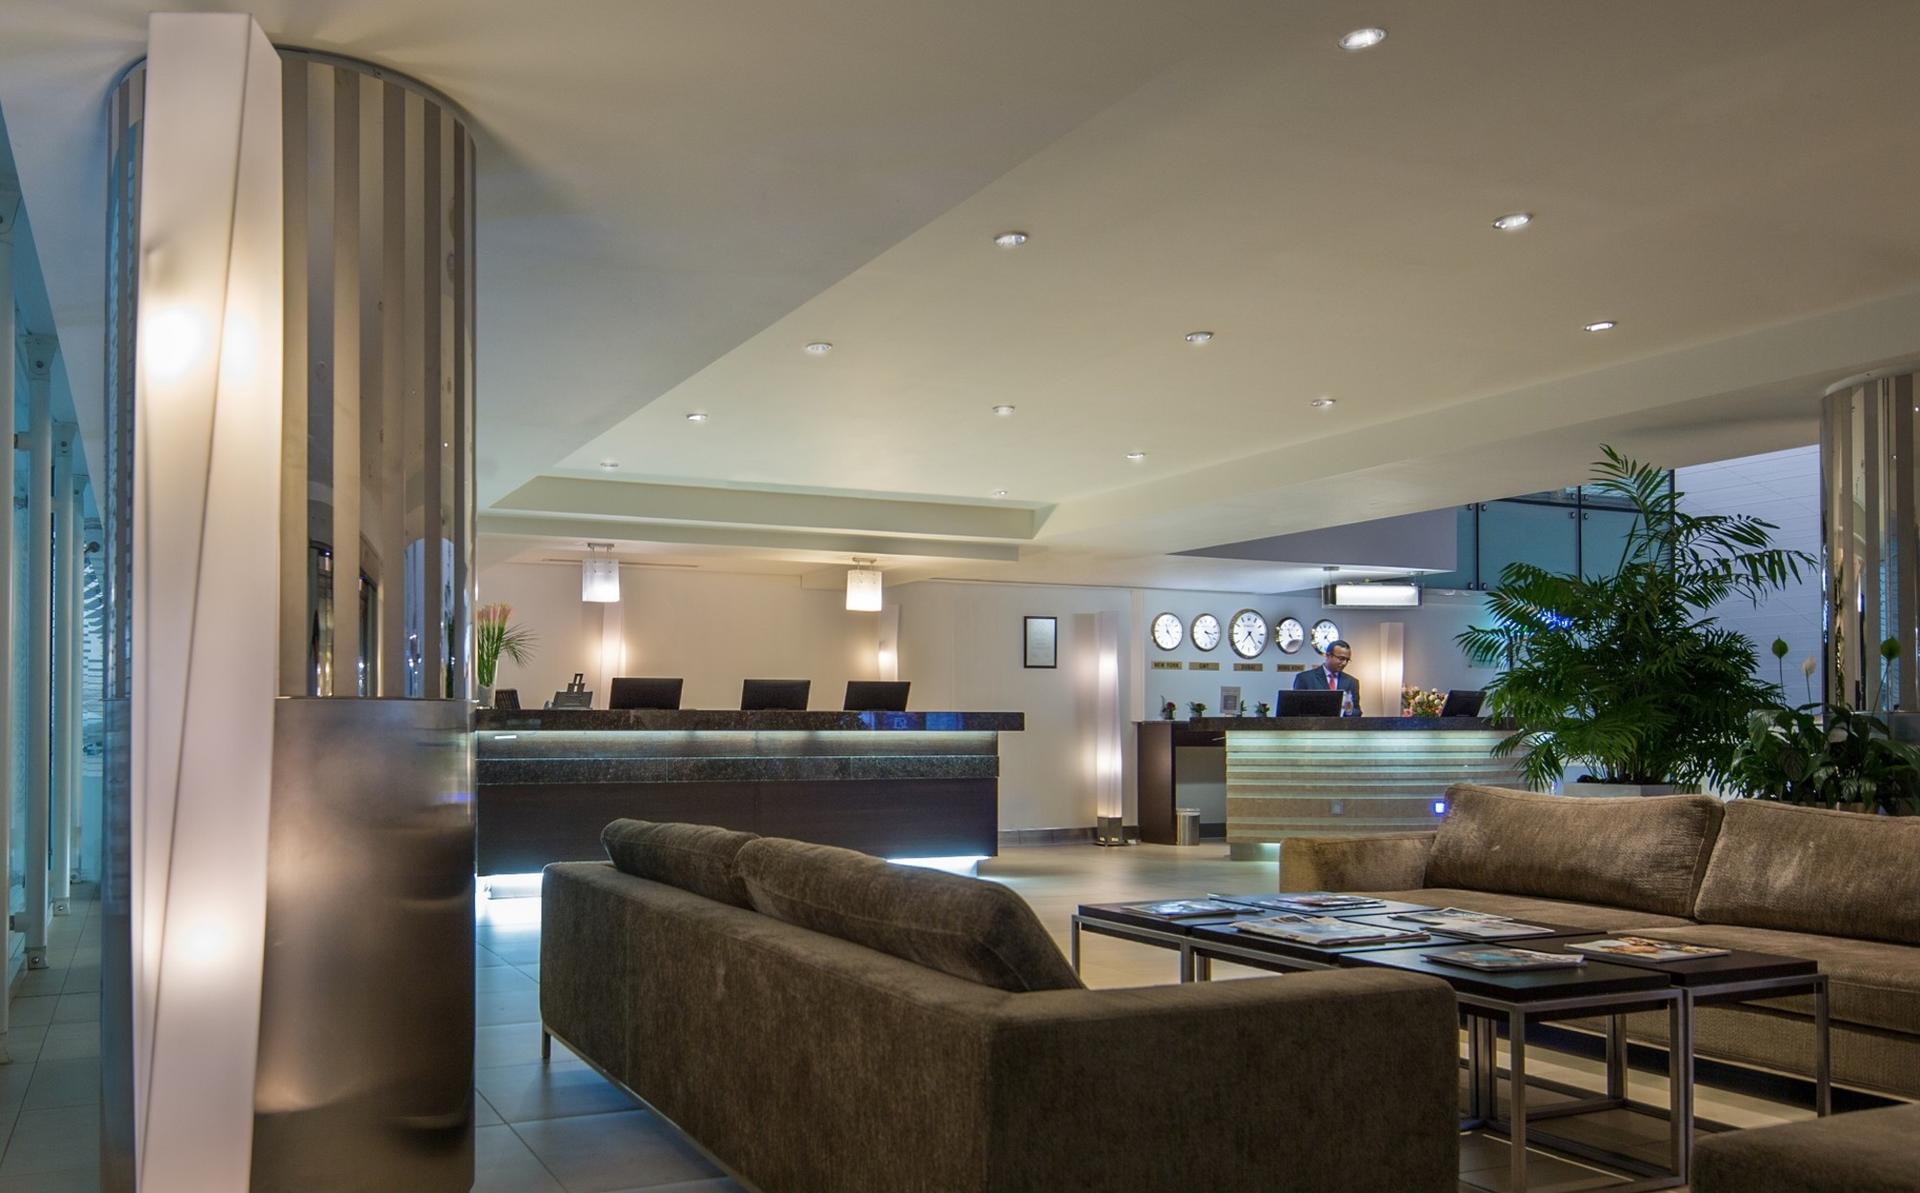 Dubai International Hotel (Concourse A) image 6 of 23